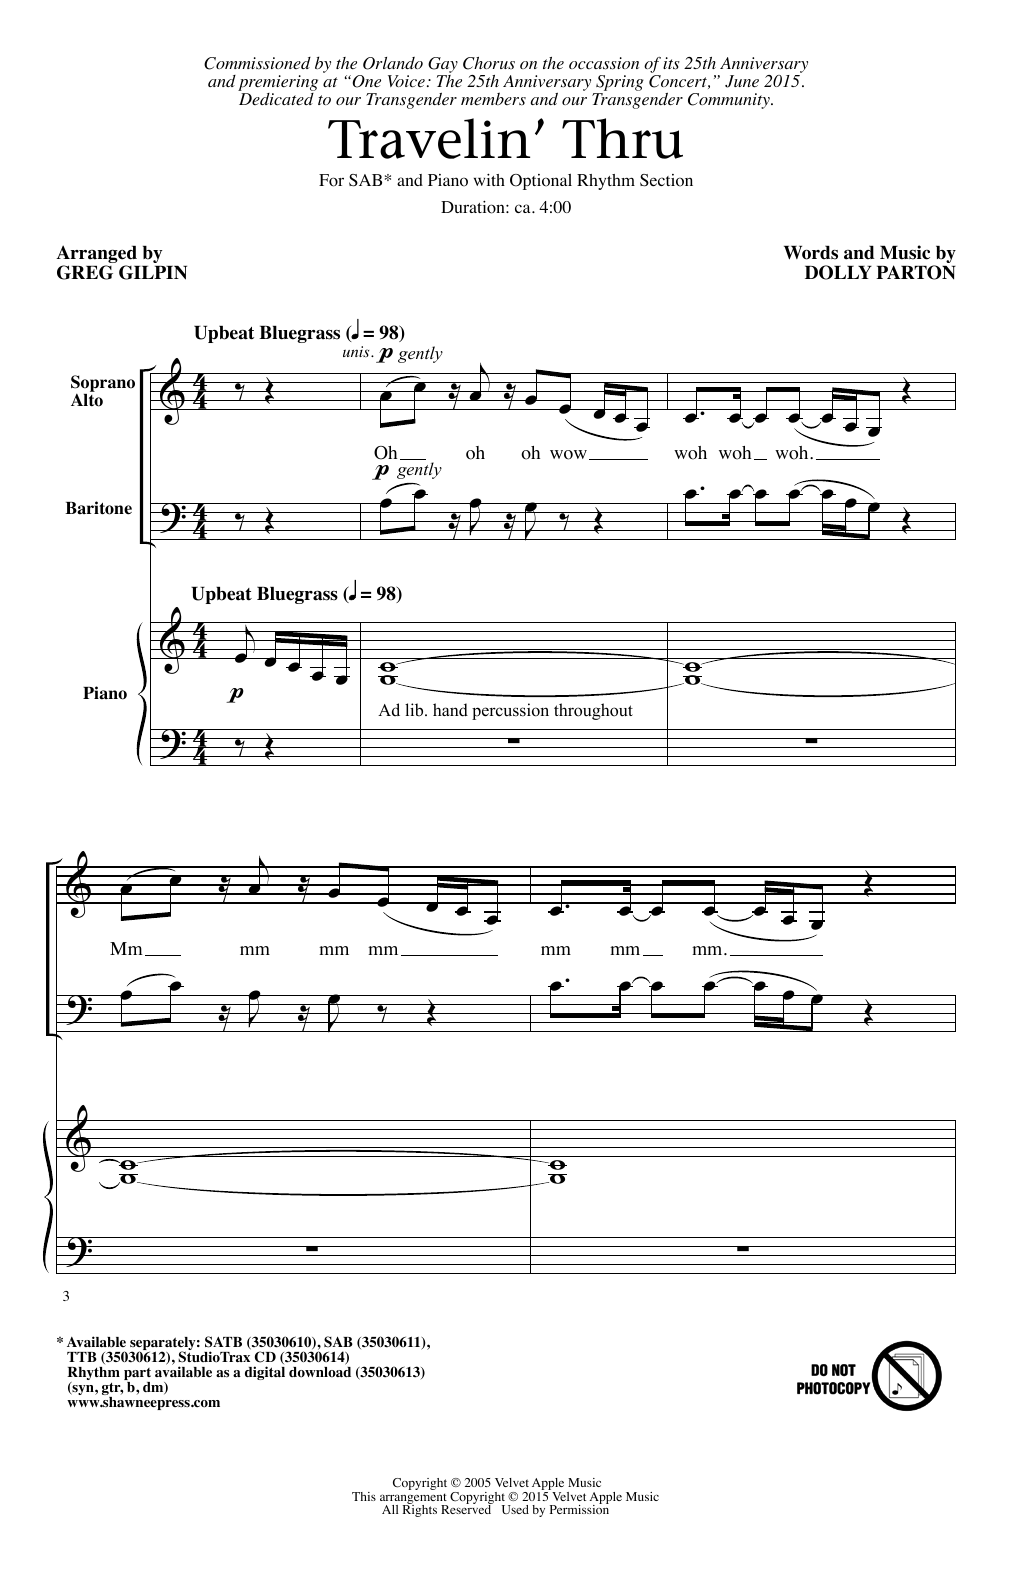 Greg Gilpin Travelin' Thru Sheet Music Notes & Chords for SATB - Download or Print PDF